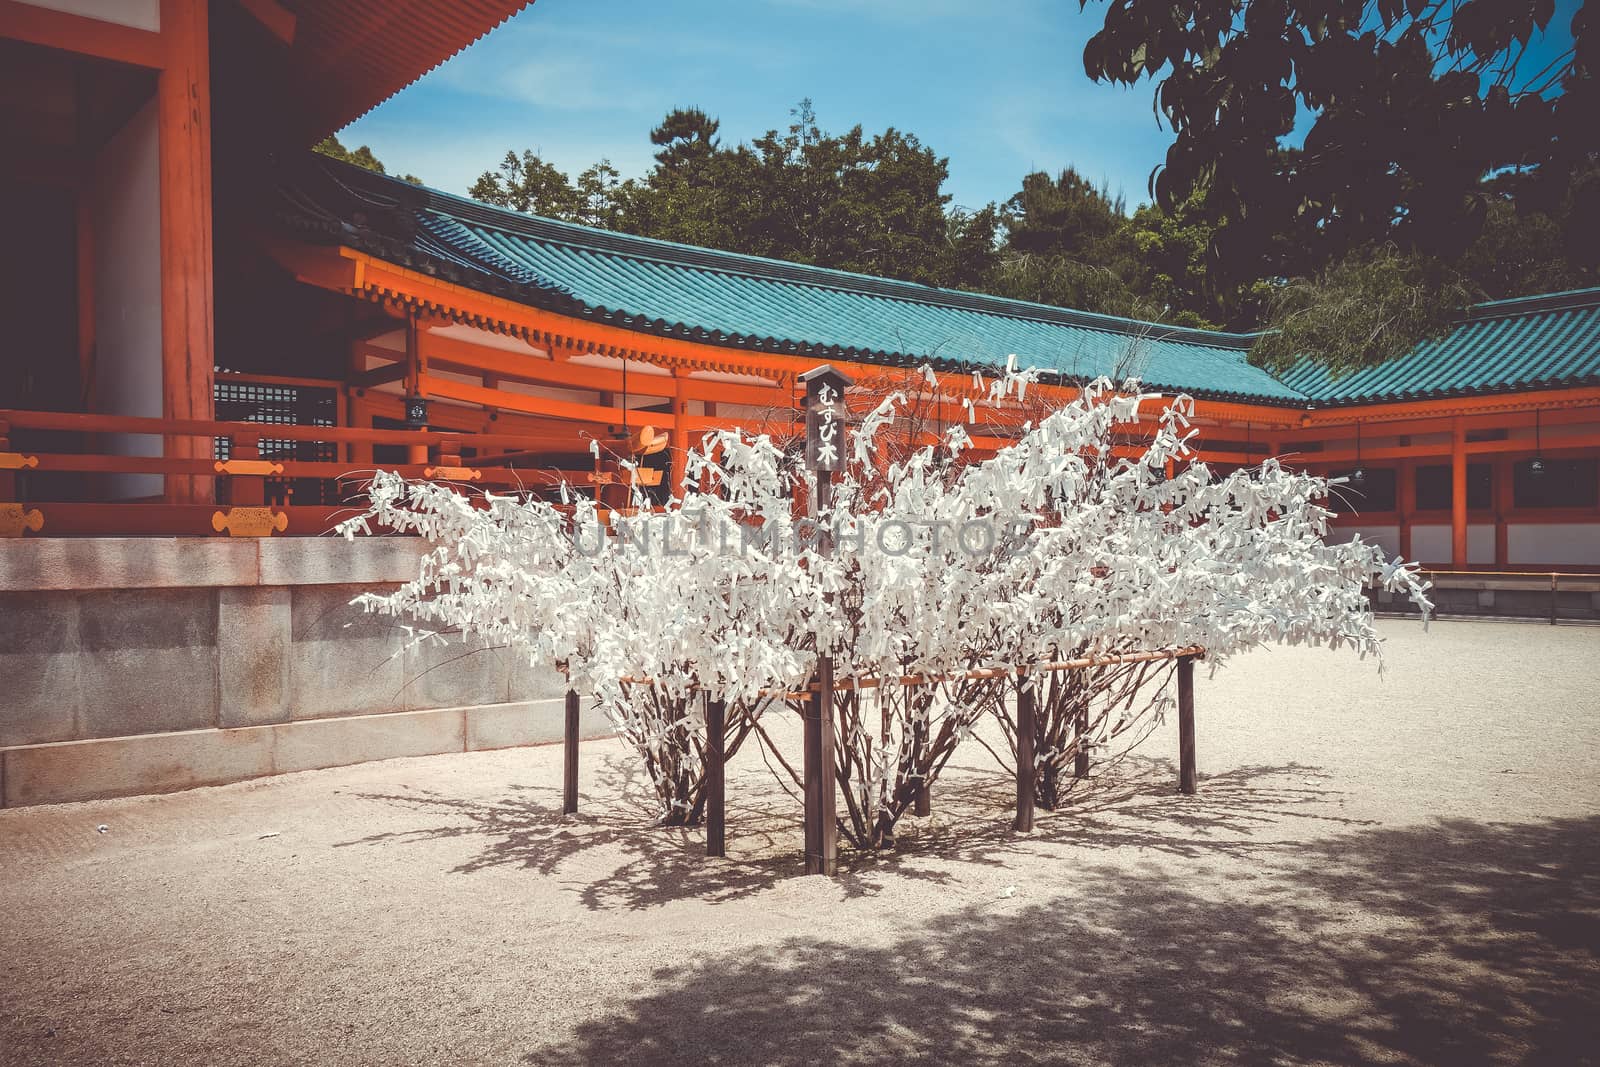 Omikuji tree at Heian Jingu Shrine temple, Kyoto, Japan by daboost